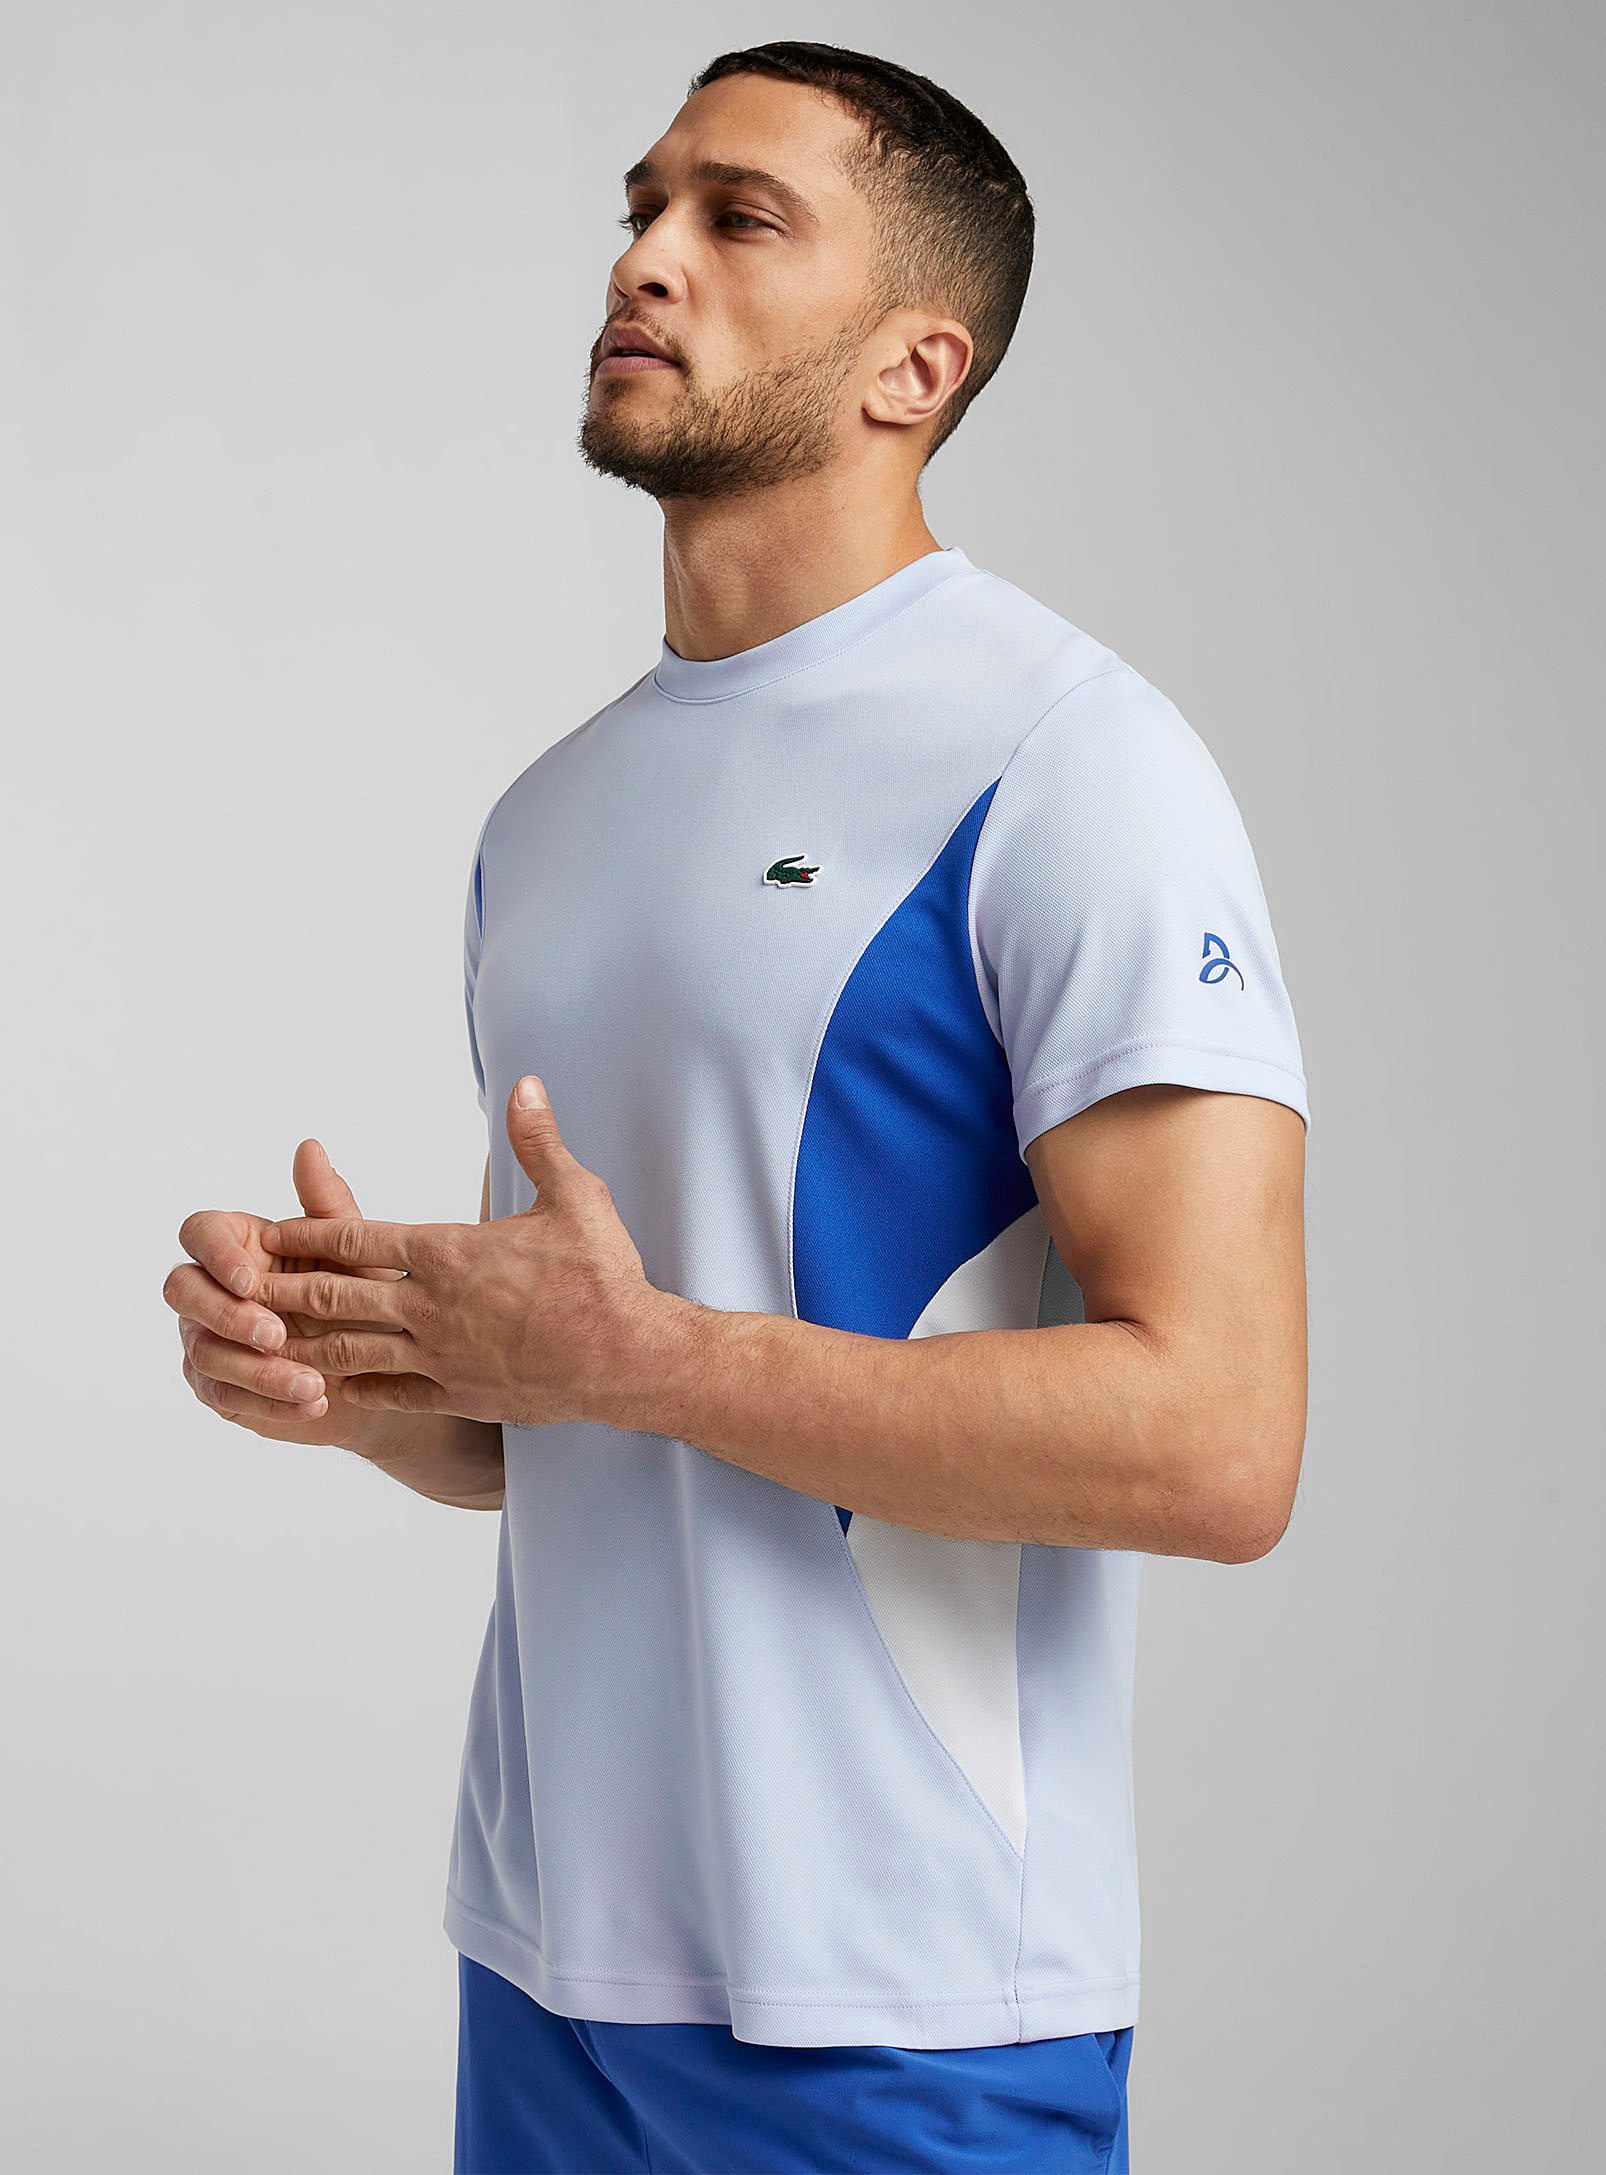 Lacoste - Men's Novak Djokovic piqué jersey Tee Shirt